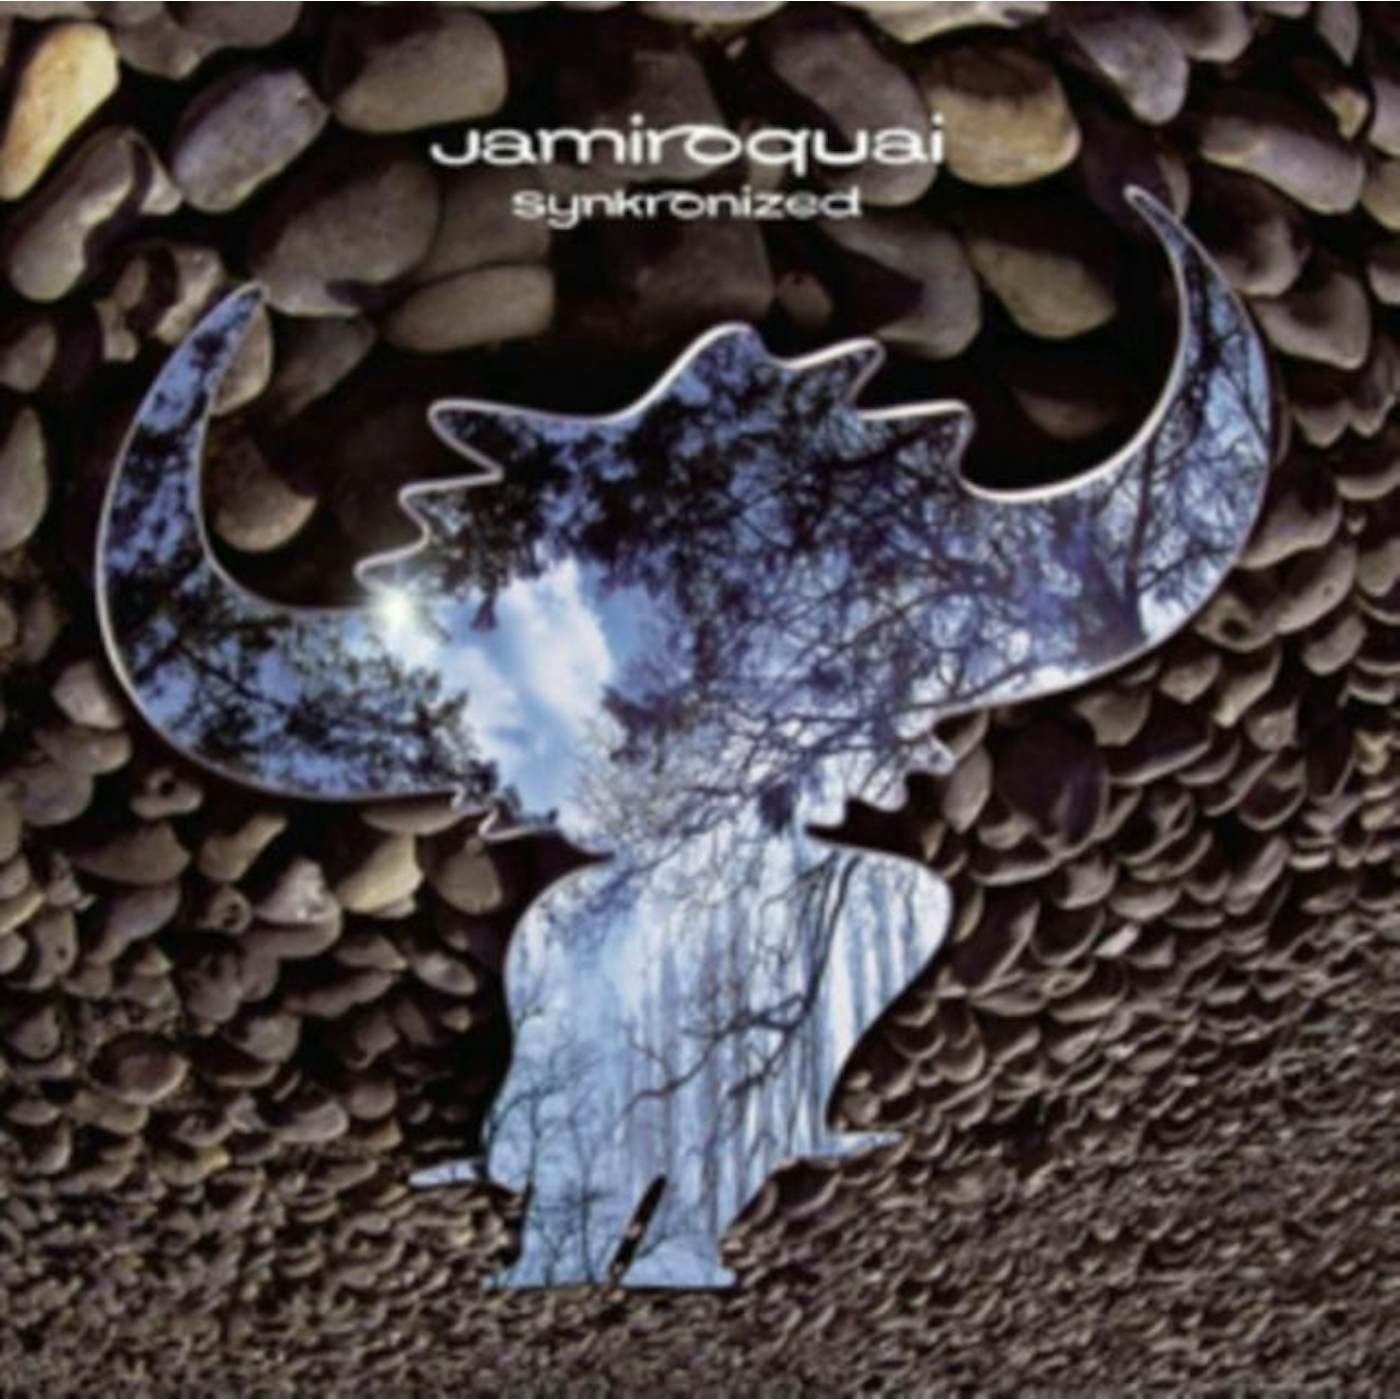 Jamiroquai LP - Synkronized (Vinyl)